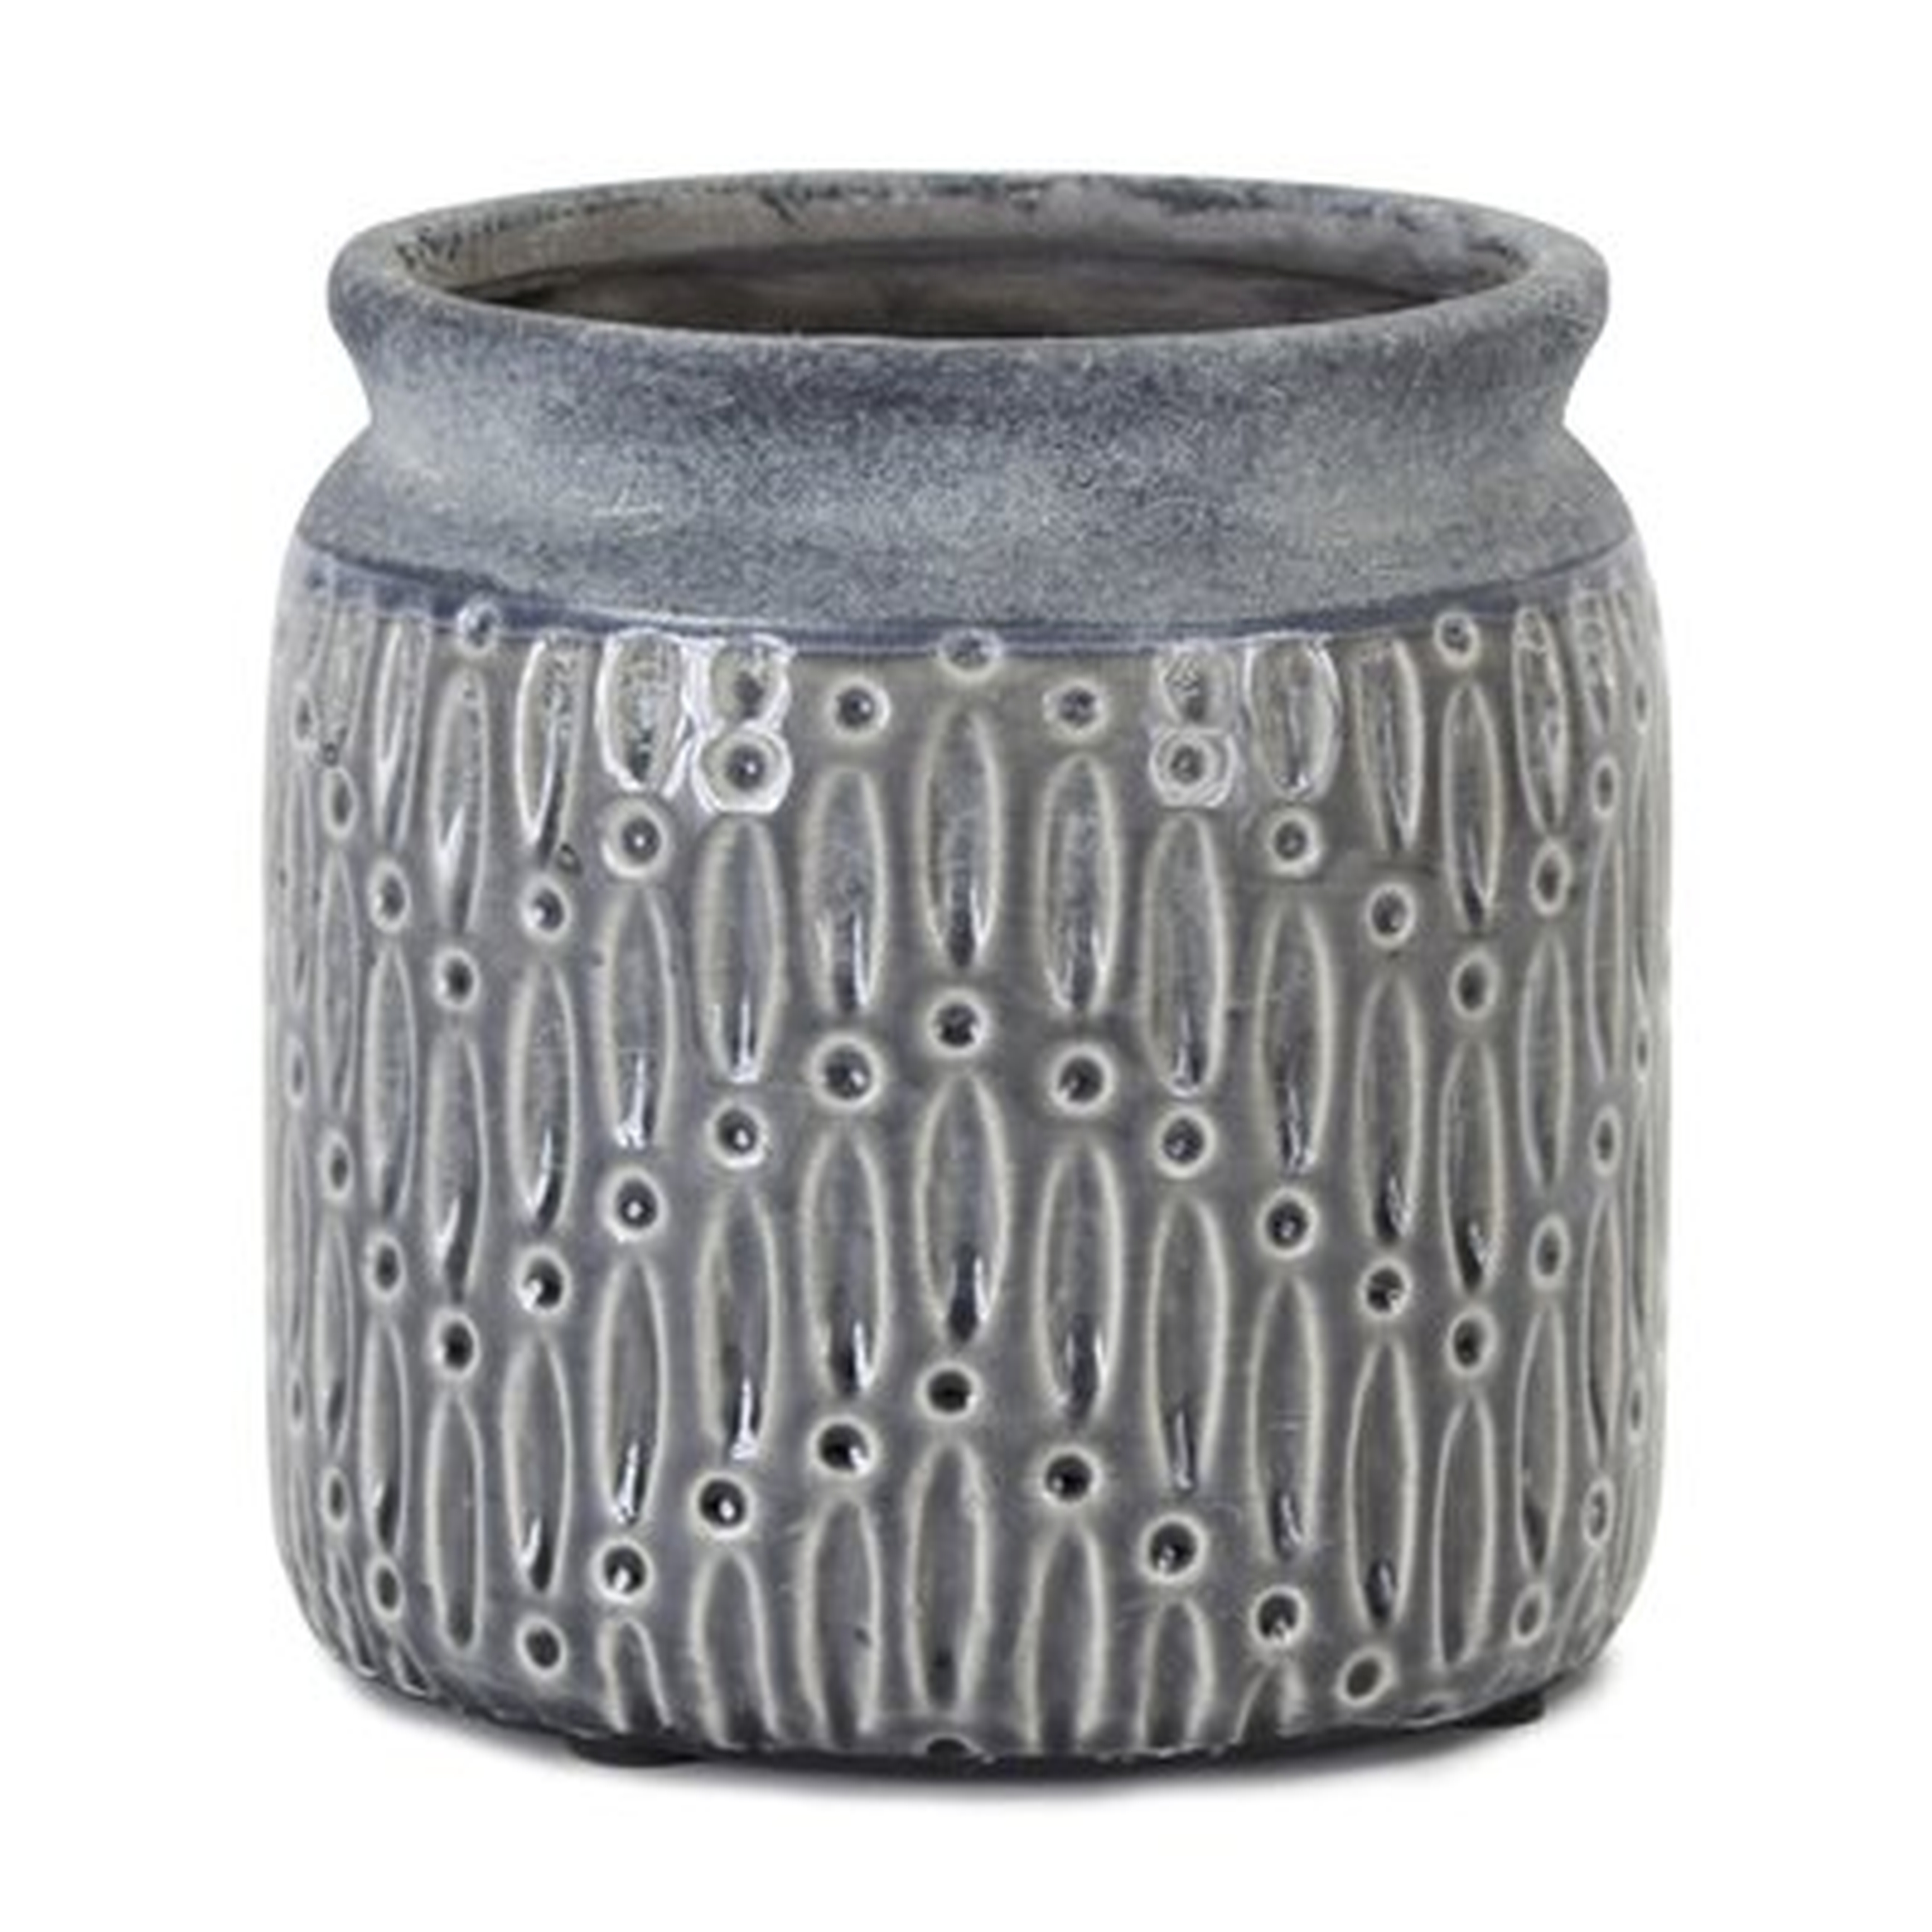 2 Piece Gray Terracotta Table Vase Set - Wayfair